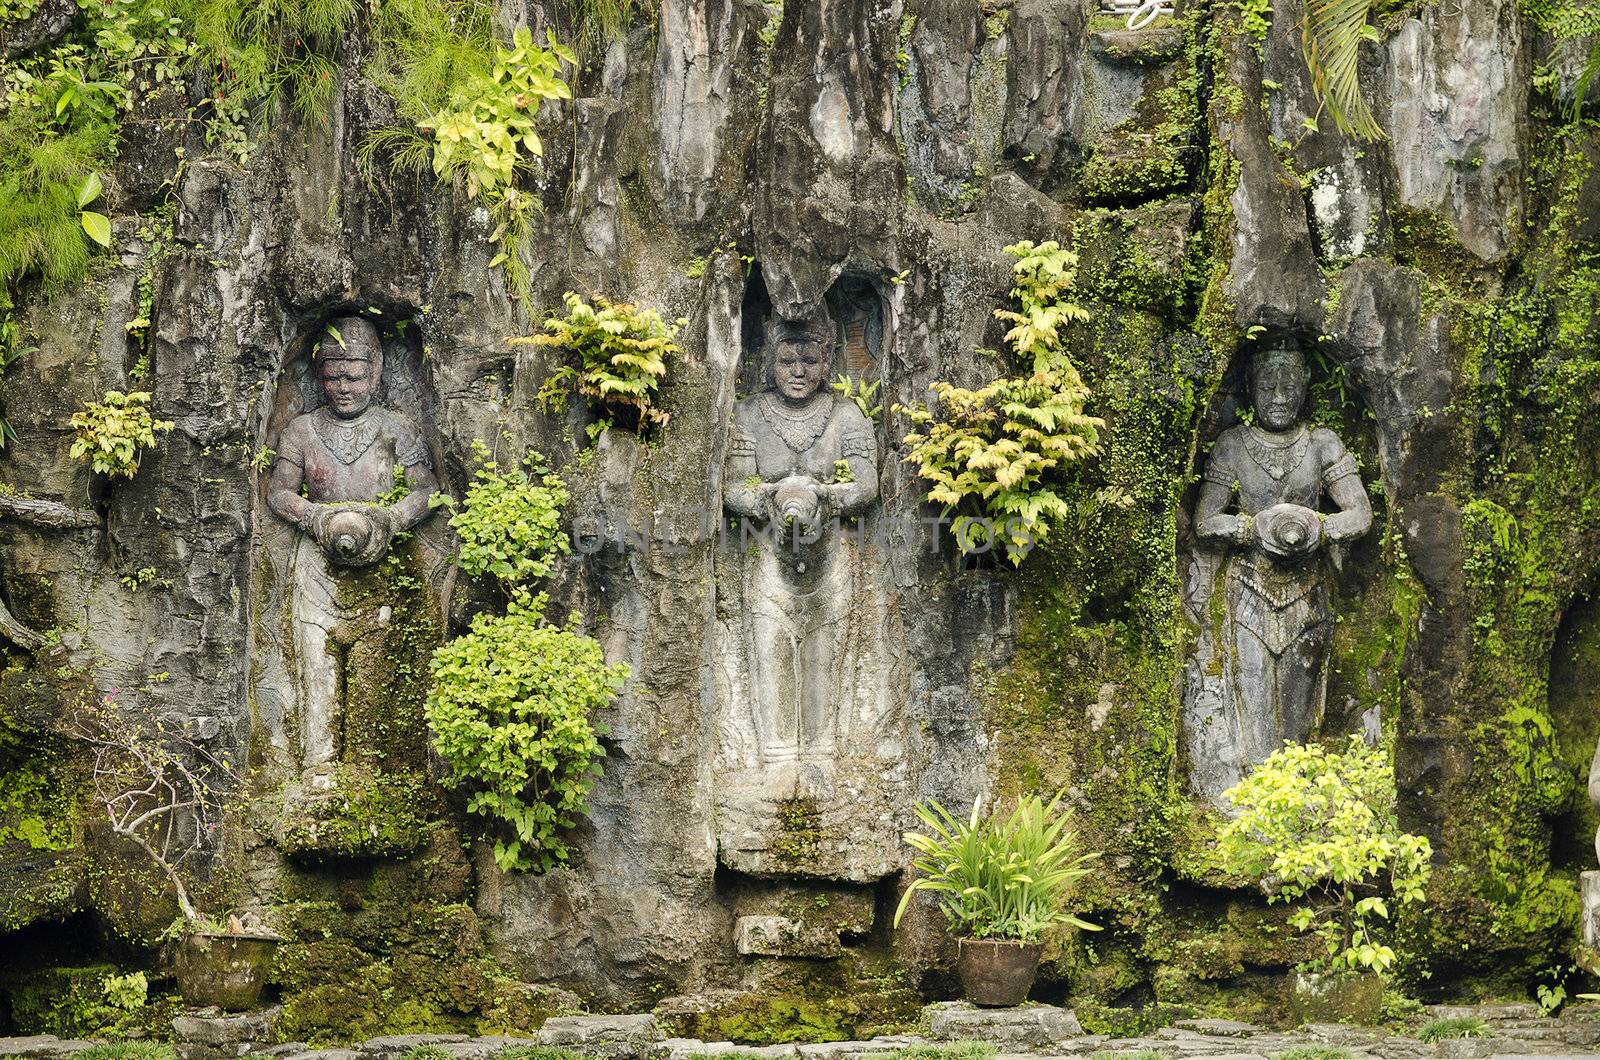 statues in bali indonesia garden by jackmalipan